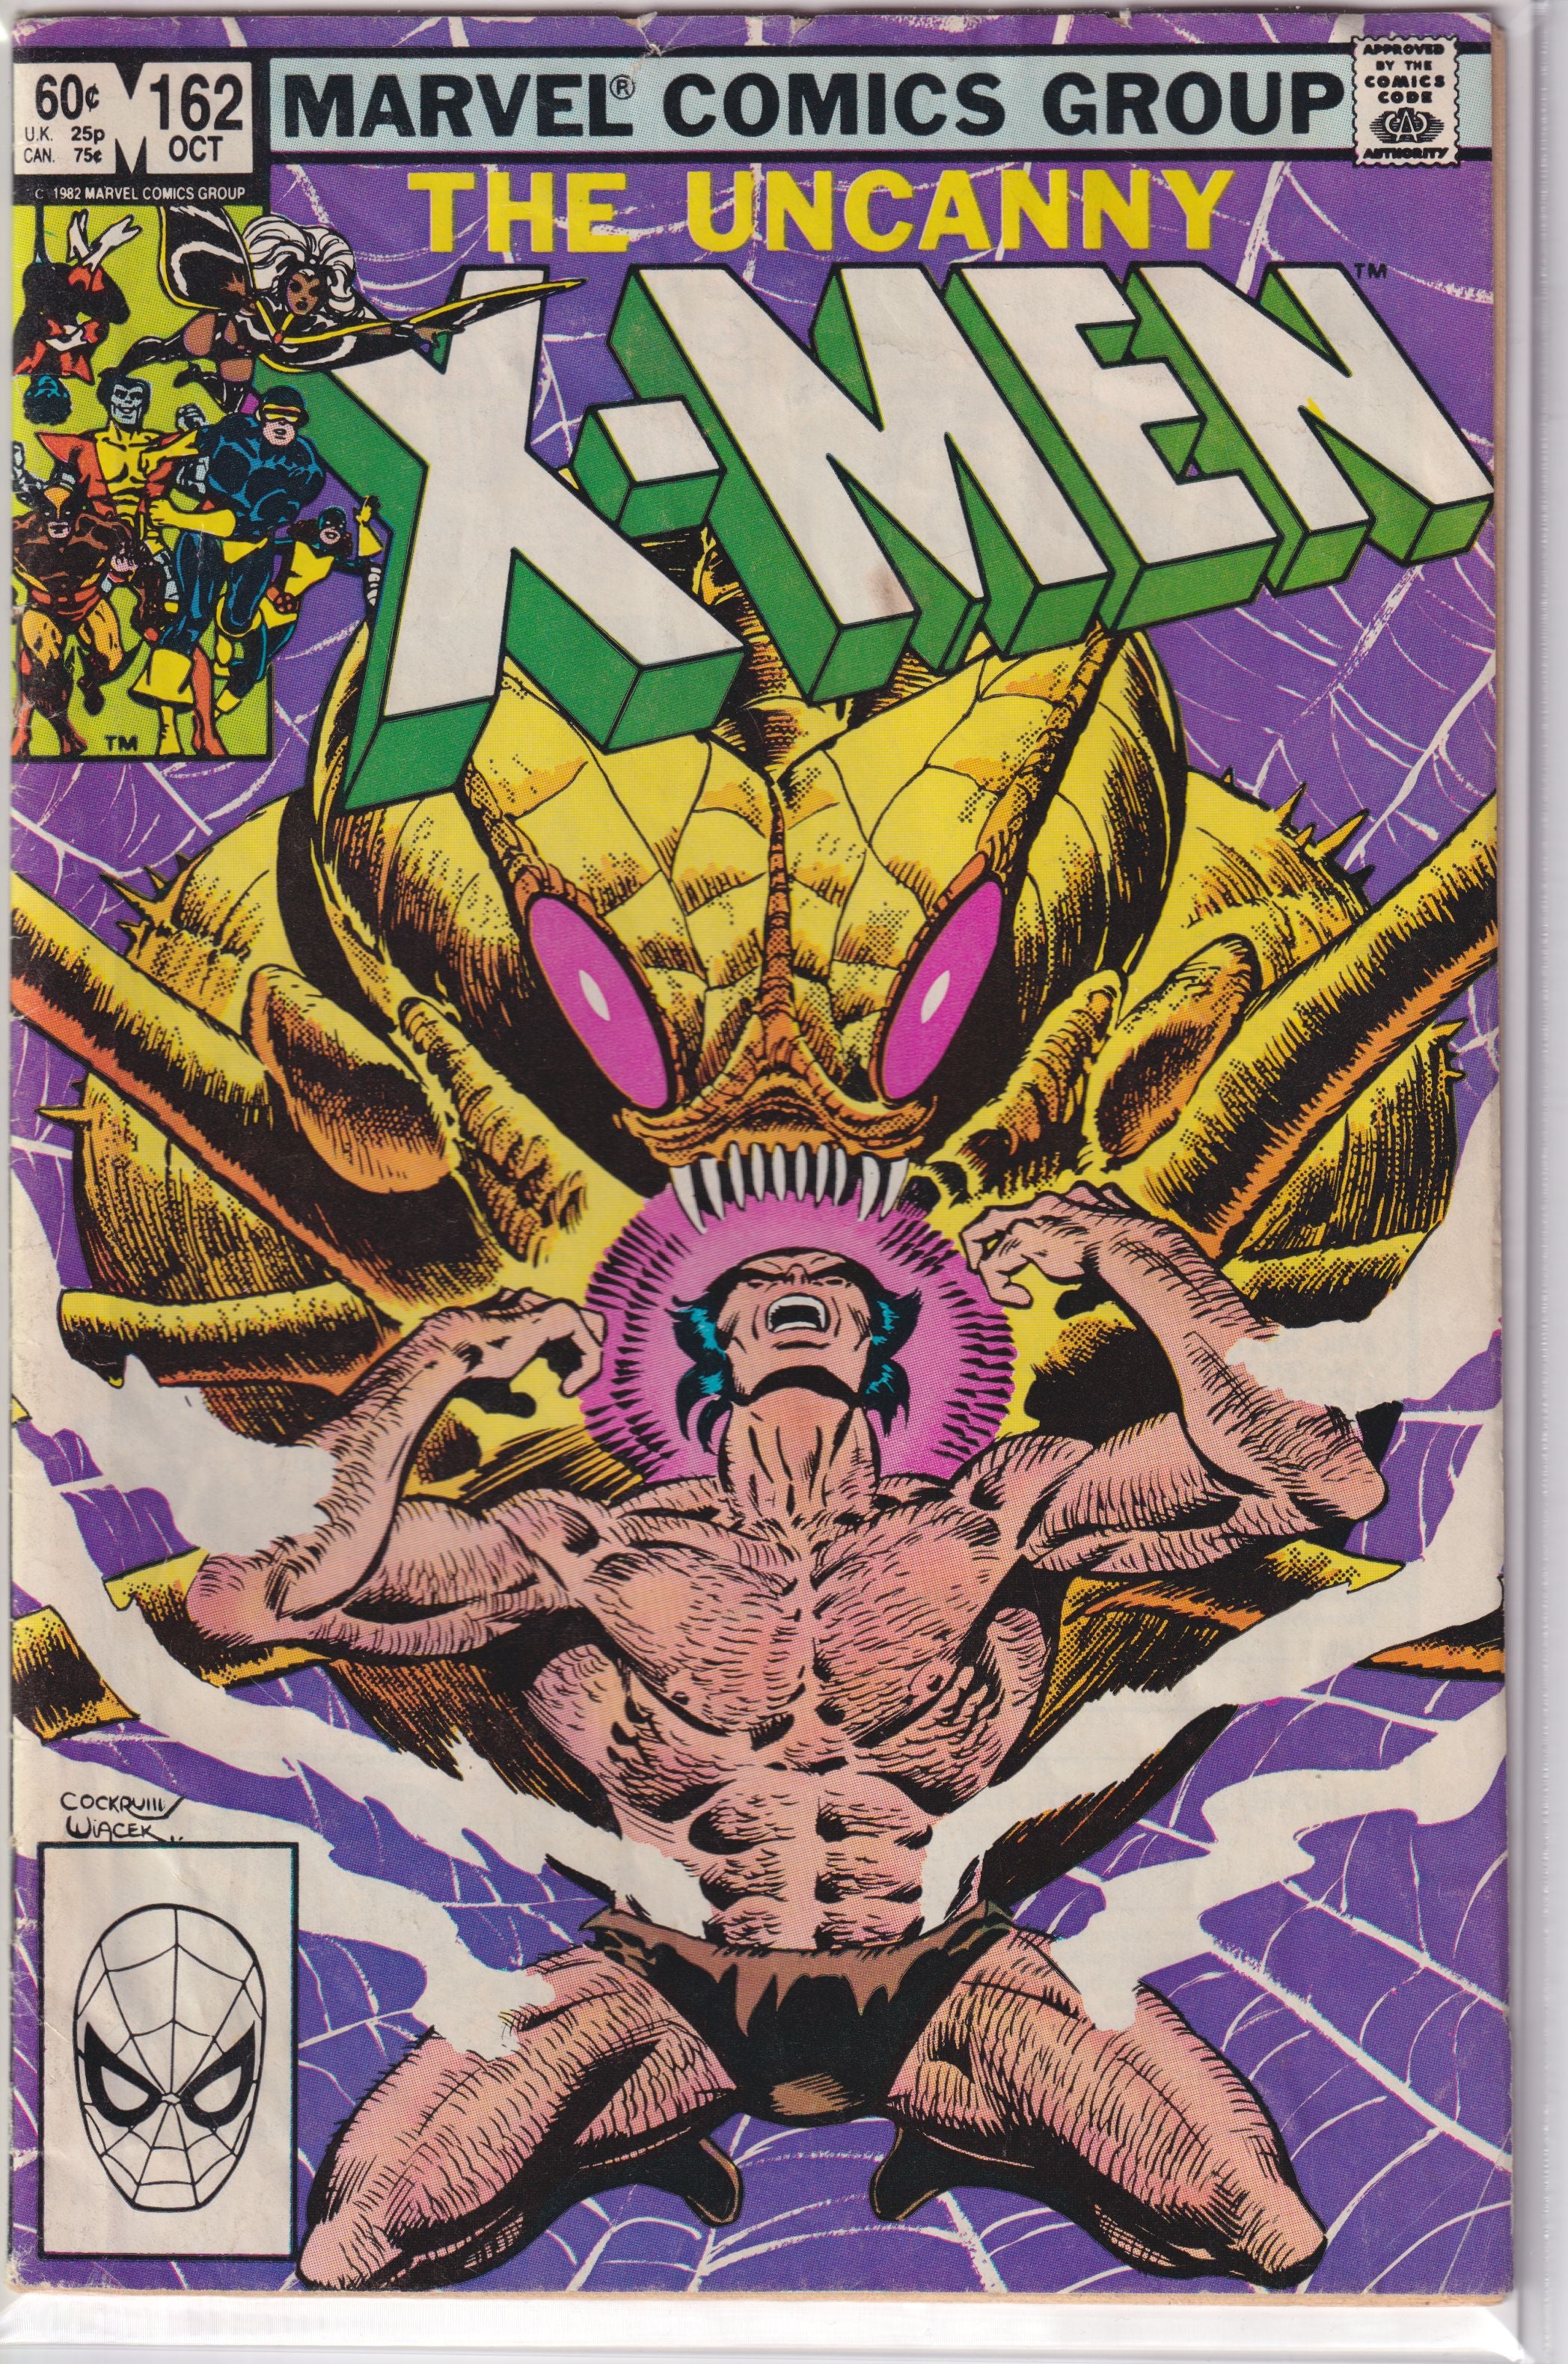 UNCANNY X-MEN (1981) #162 VG